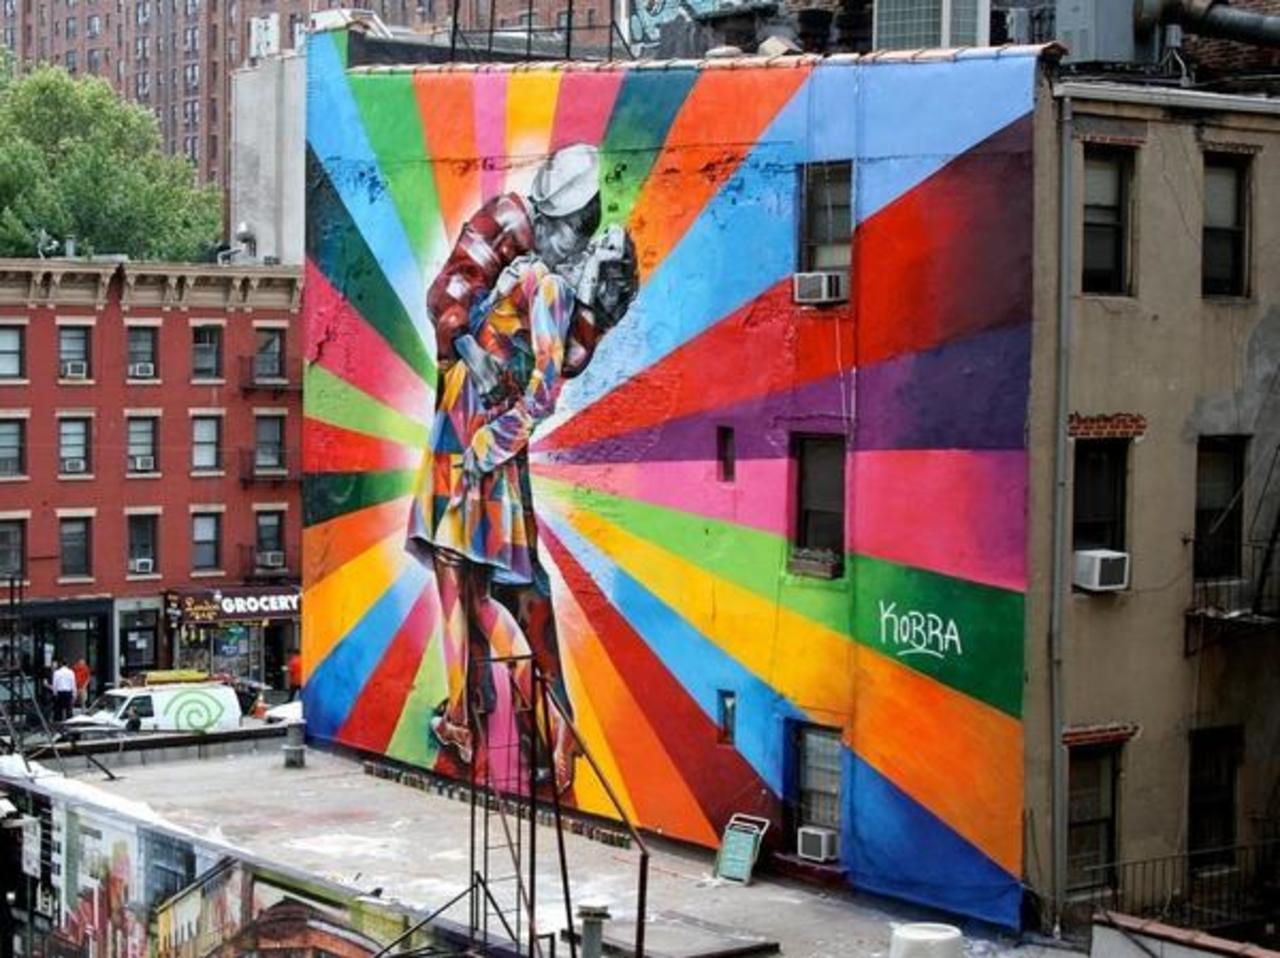 Rainbow of Kiss ! Brazilian muralist Eduardo Kobra creates splendid art
#art #kobra #color #graffiti #streetart http://t.co/1byYbwusbT